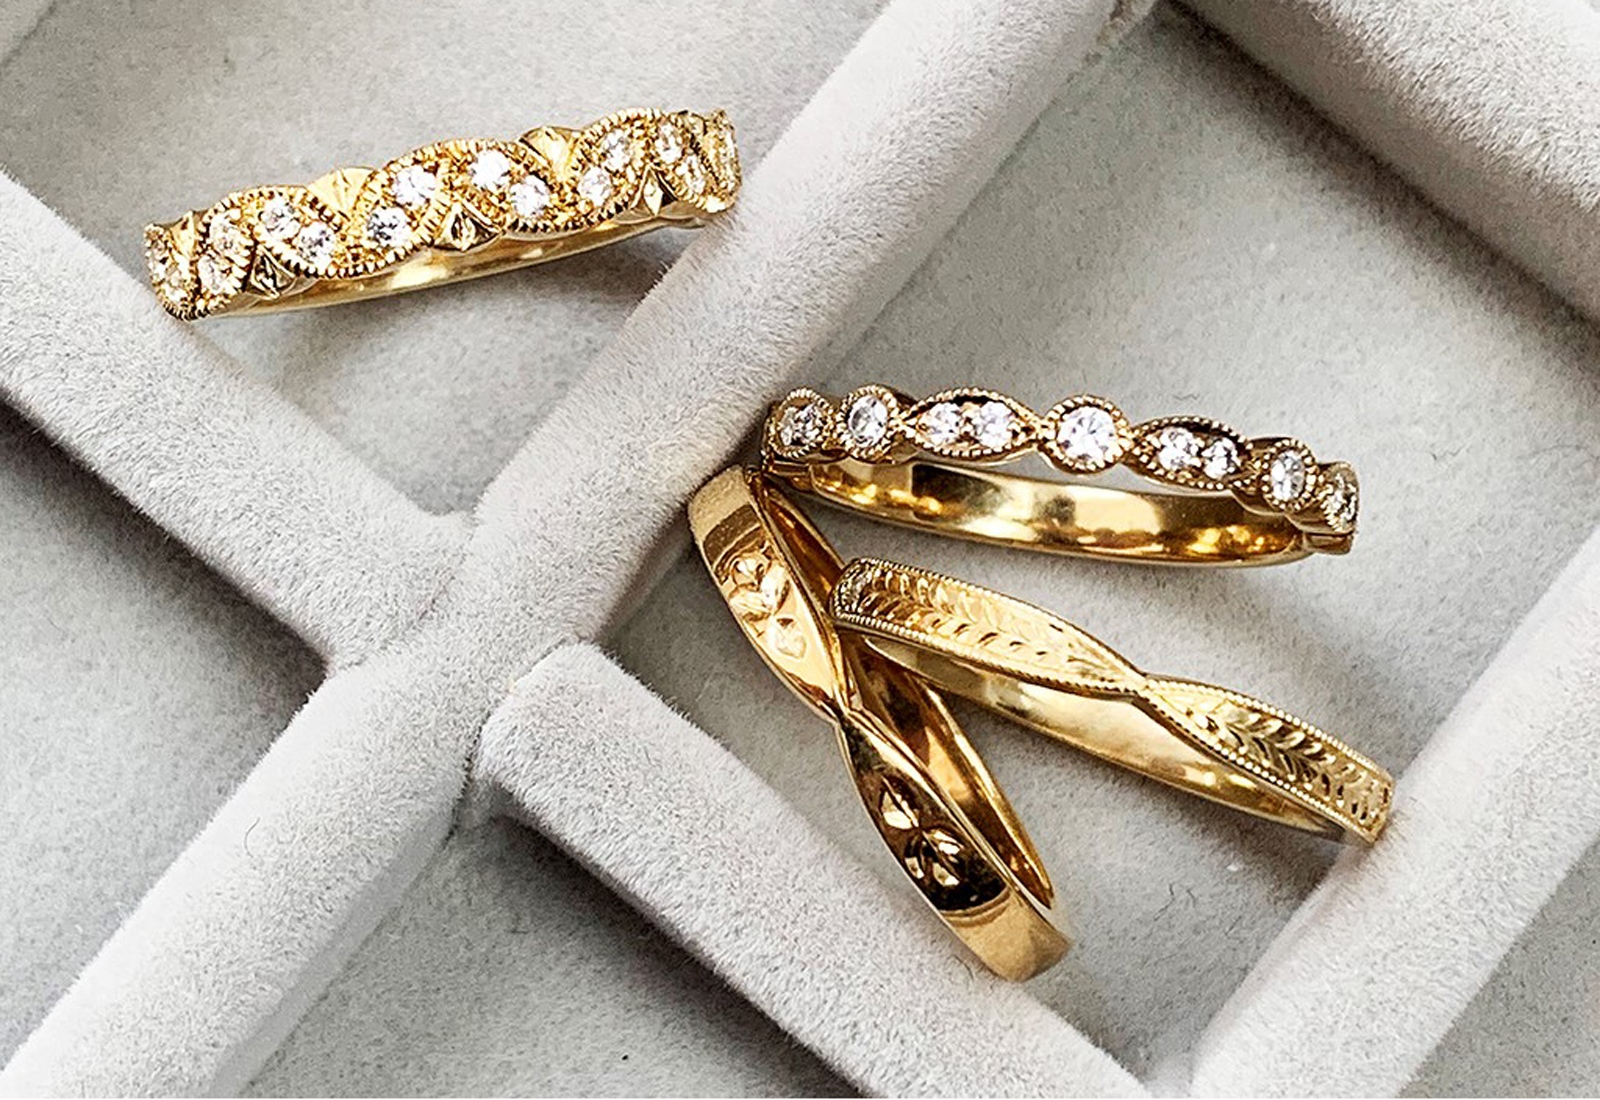 Betul Malik Fine Jewelry 3 Diamond 14K Gold Ring | Poet and the Bench